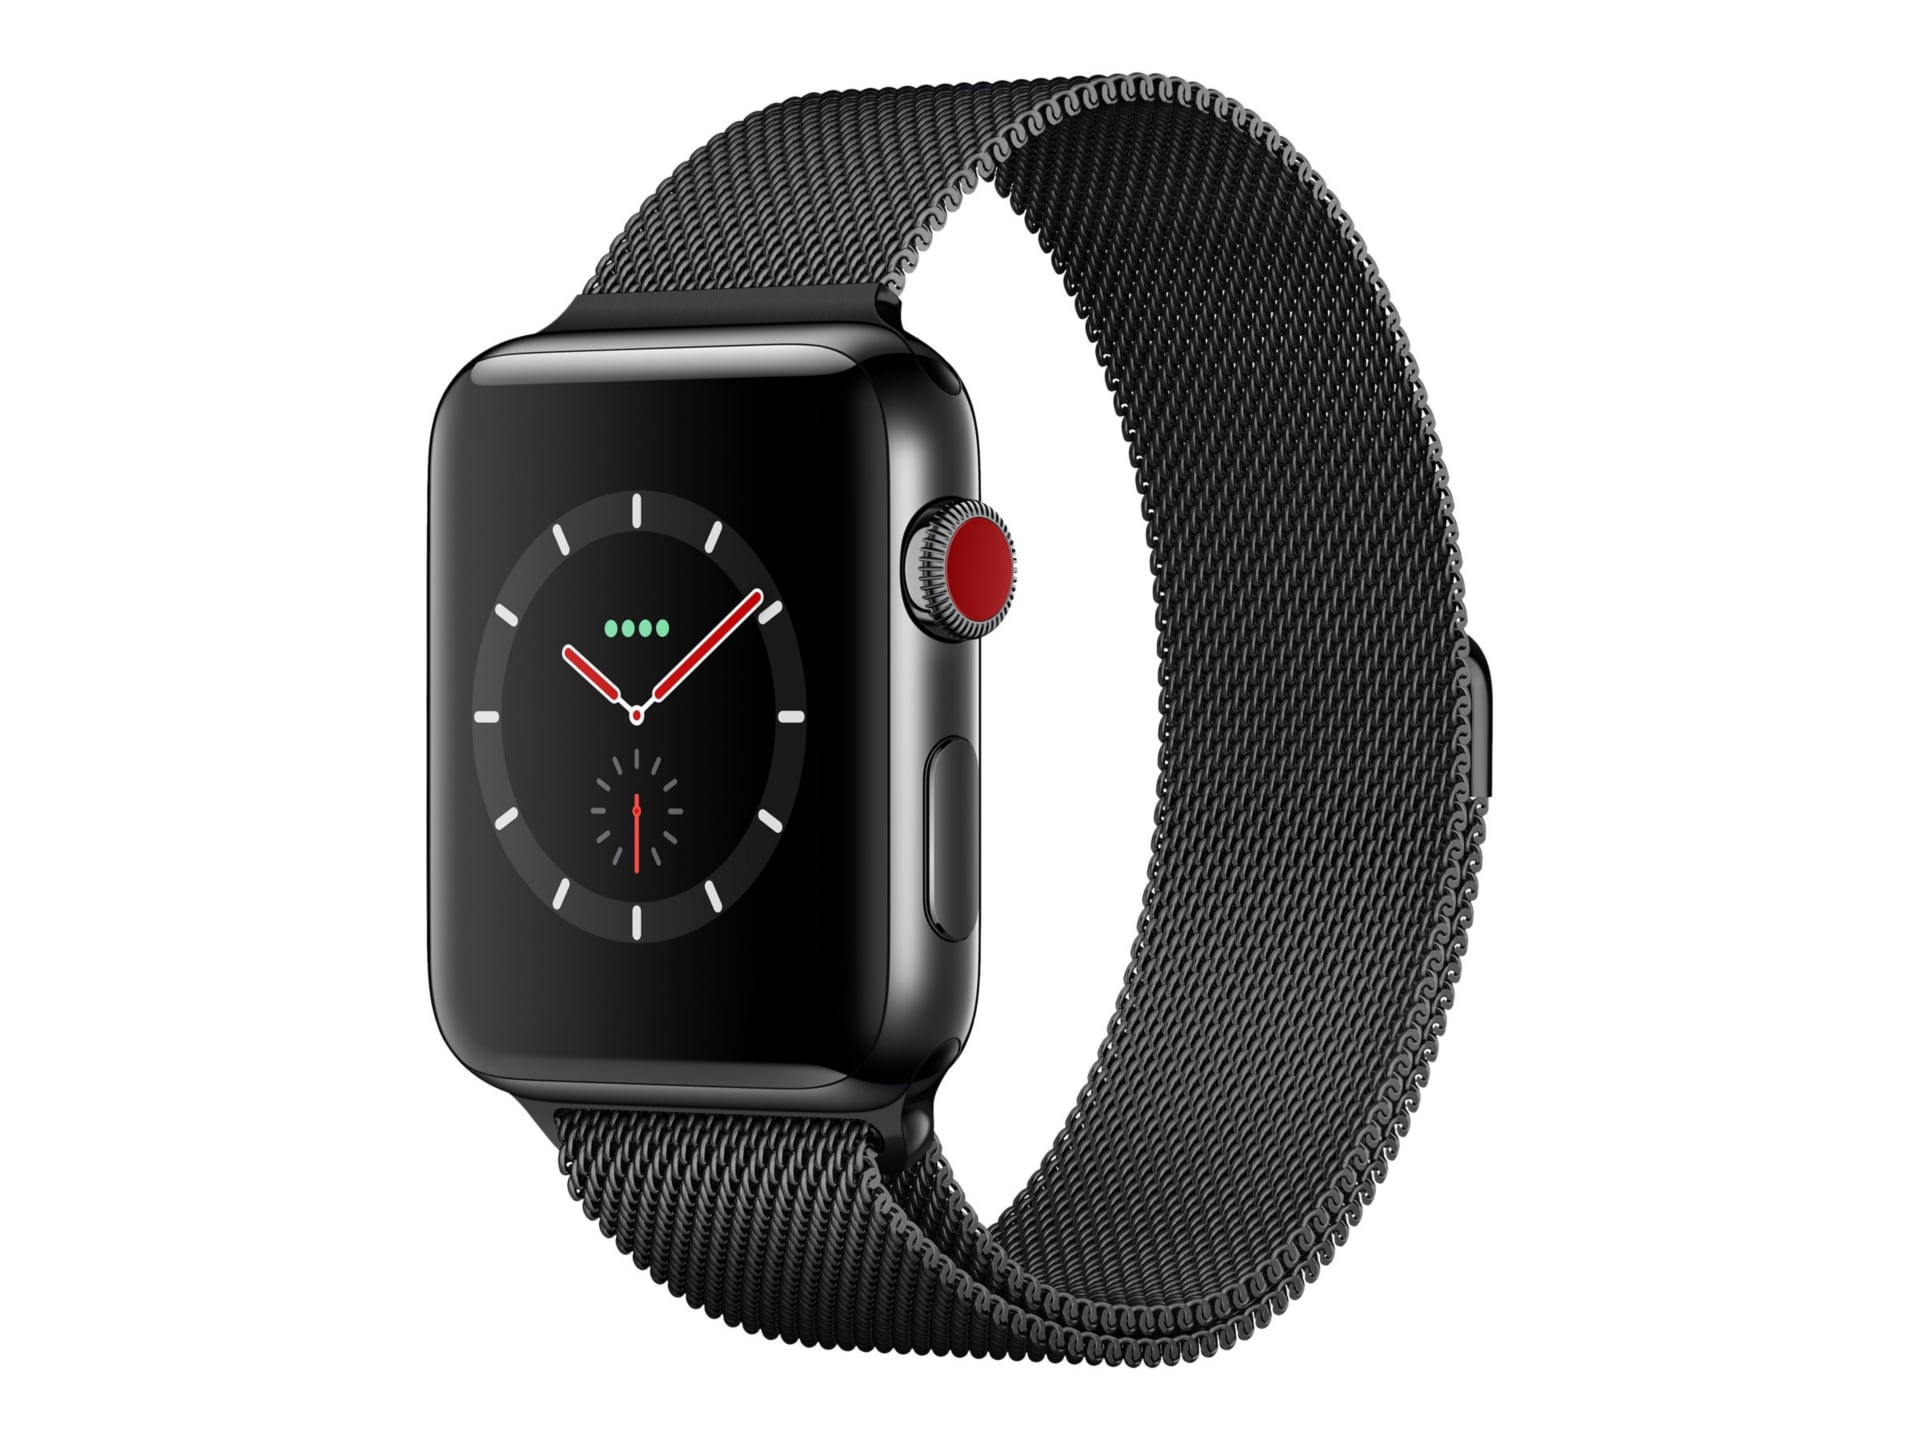 Apple Watch Series 3 (GPS + Cellular) - space black stainless steel - smart watch with milanese loop - space black - 16